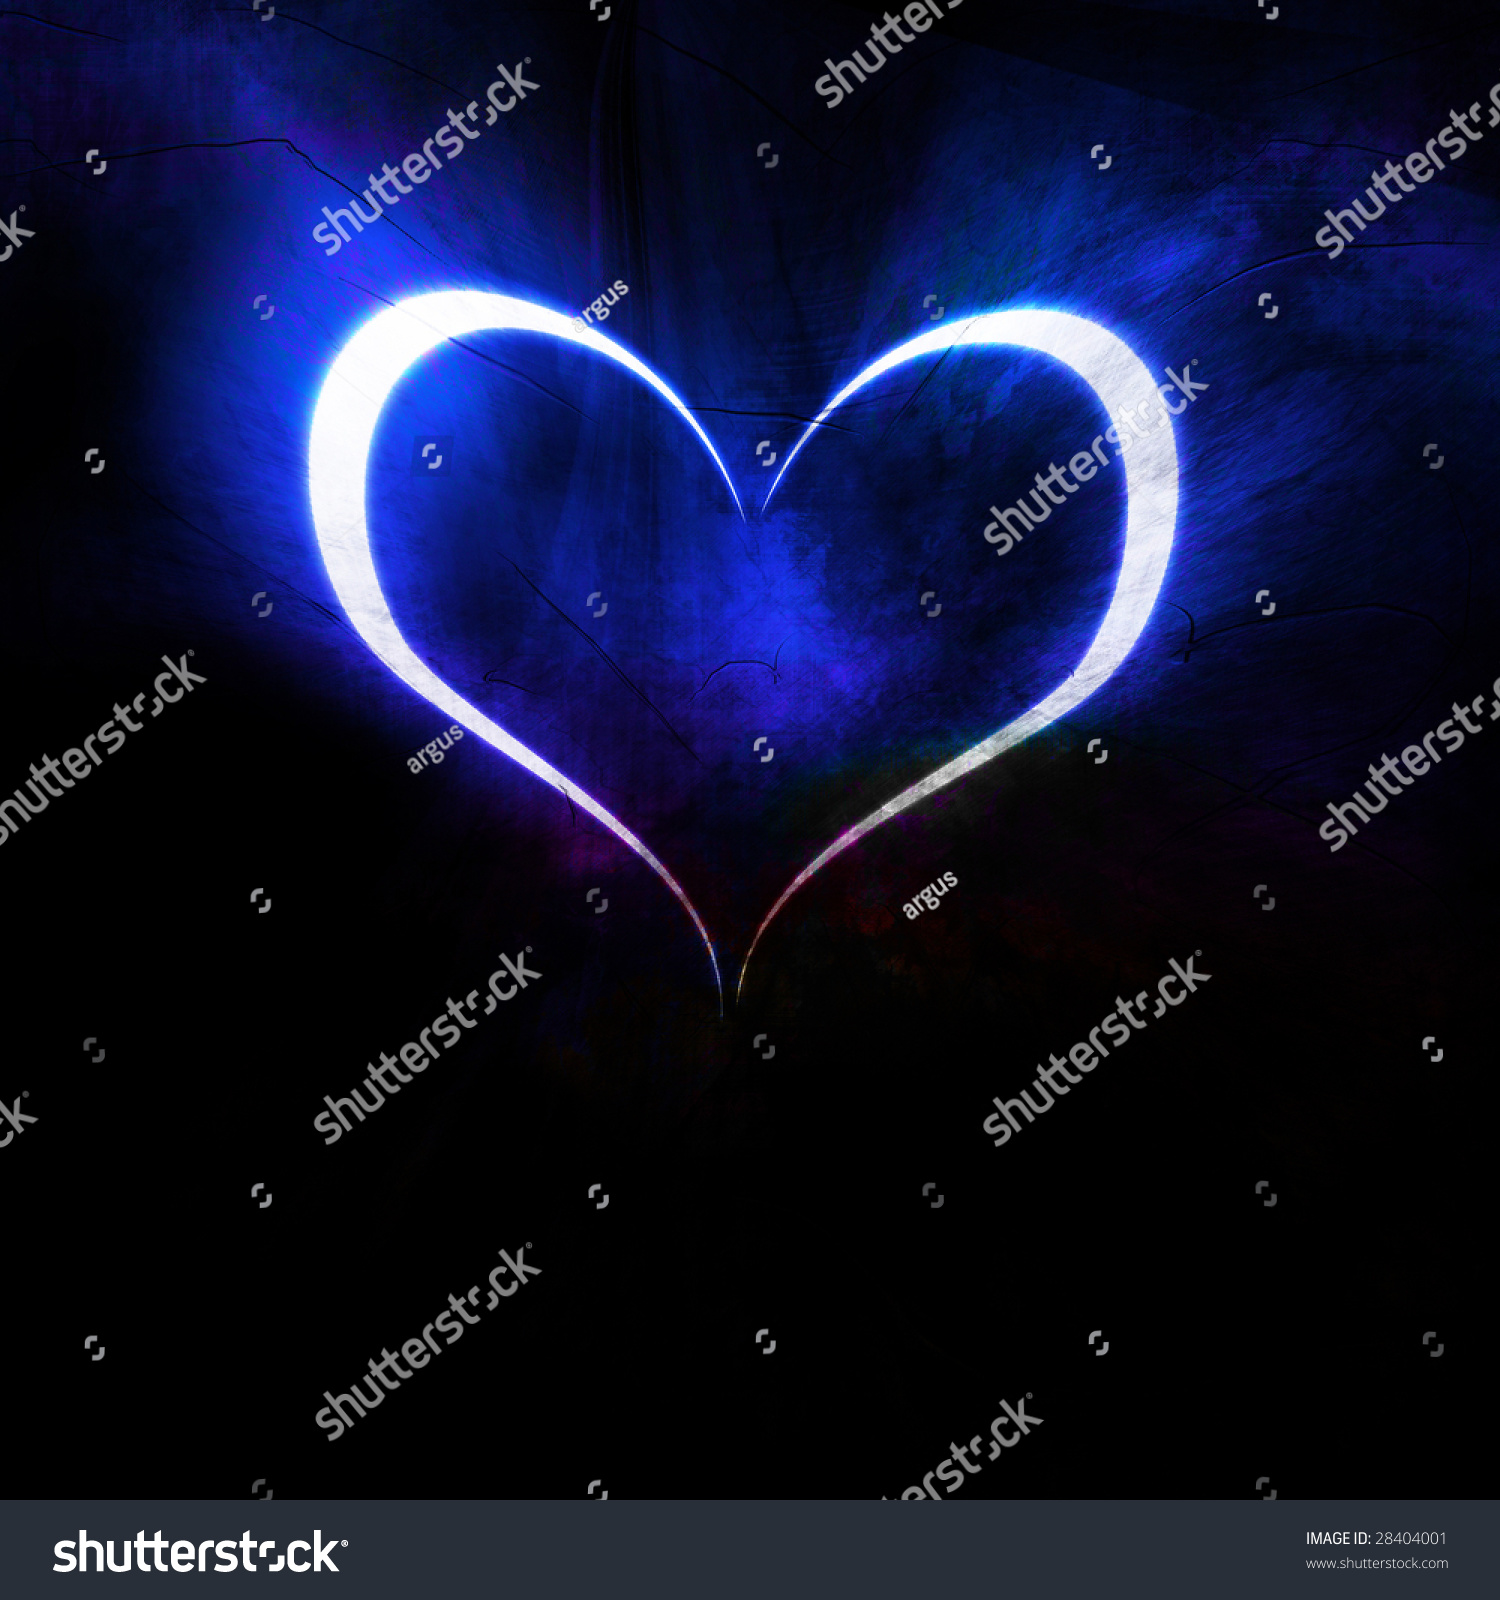 Blue Heart On A Dark Black Background Stock Photo 28404001 : Shutterstock